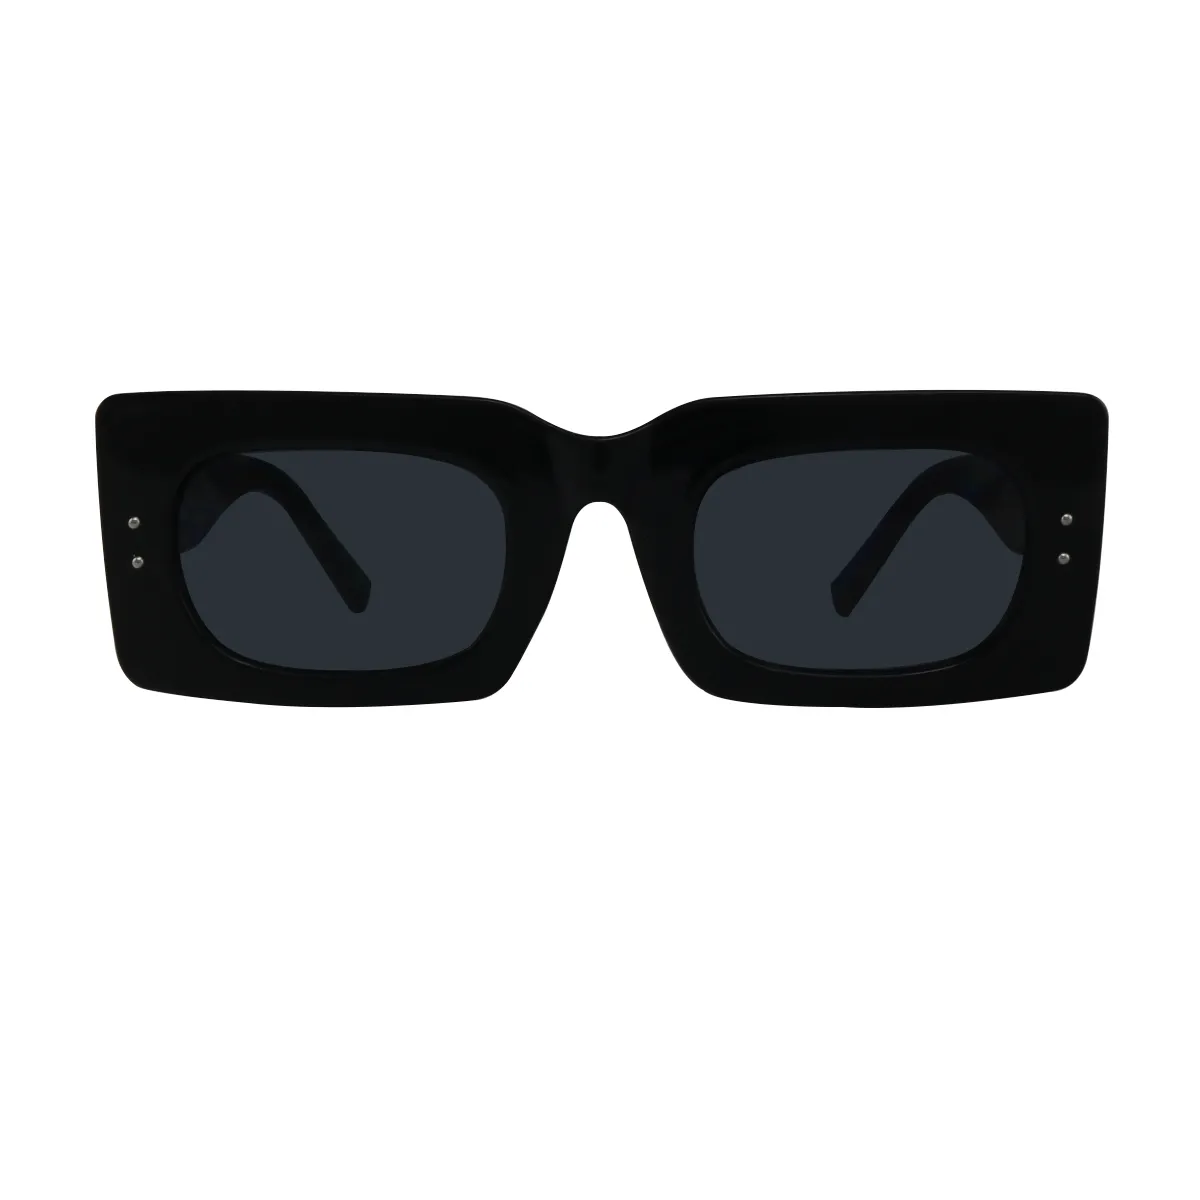 Eudora - glasses Black Sunglasses for Women